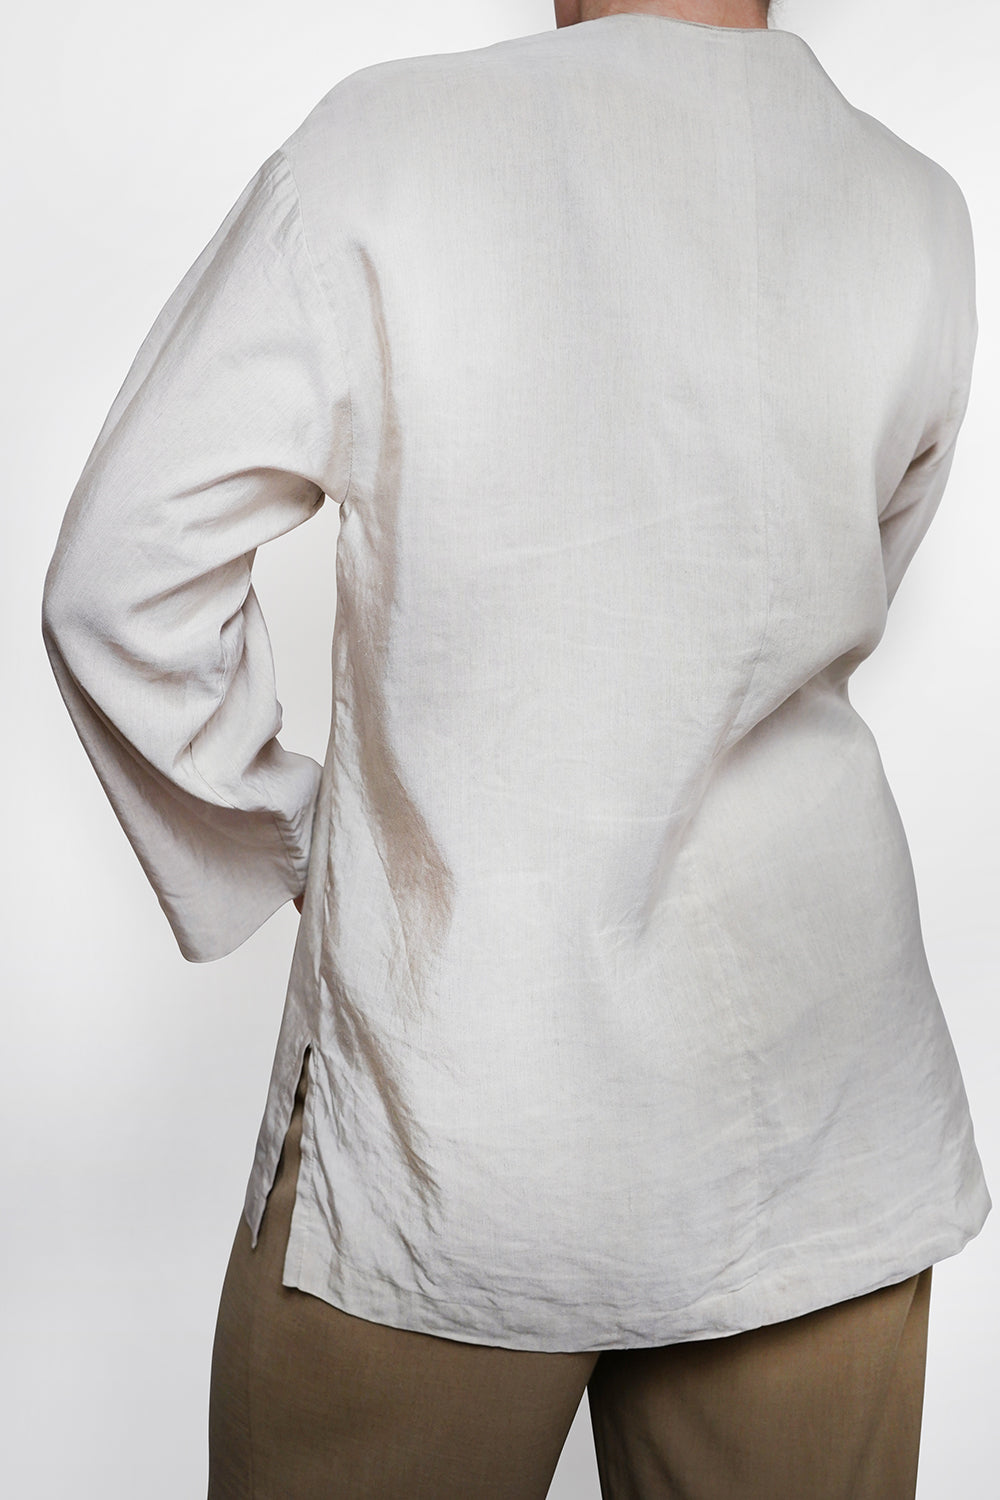 Vintage Cerruti 1881 Oversized Silk Shirt or Jacket Size 8-12